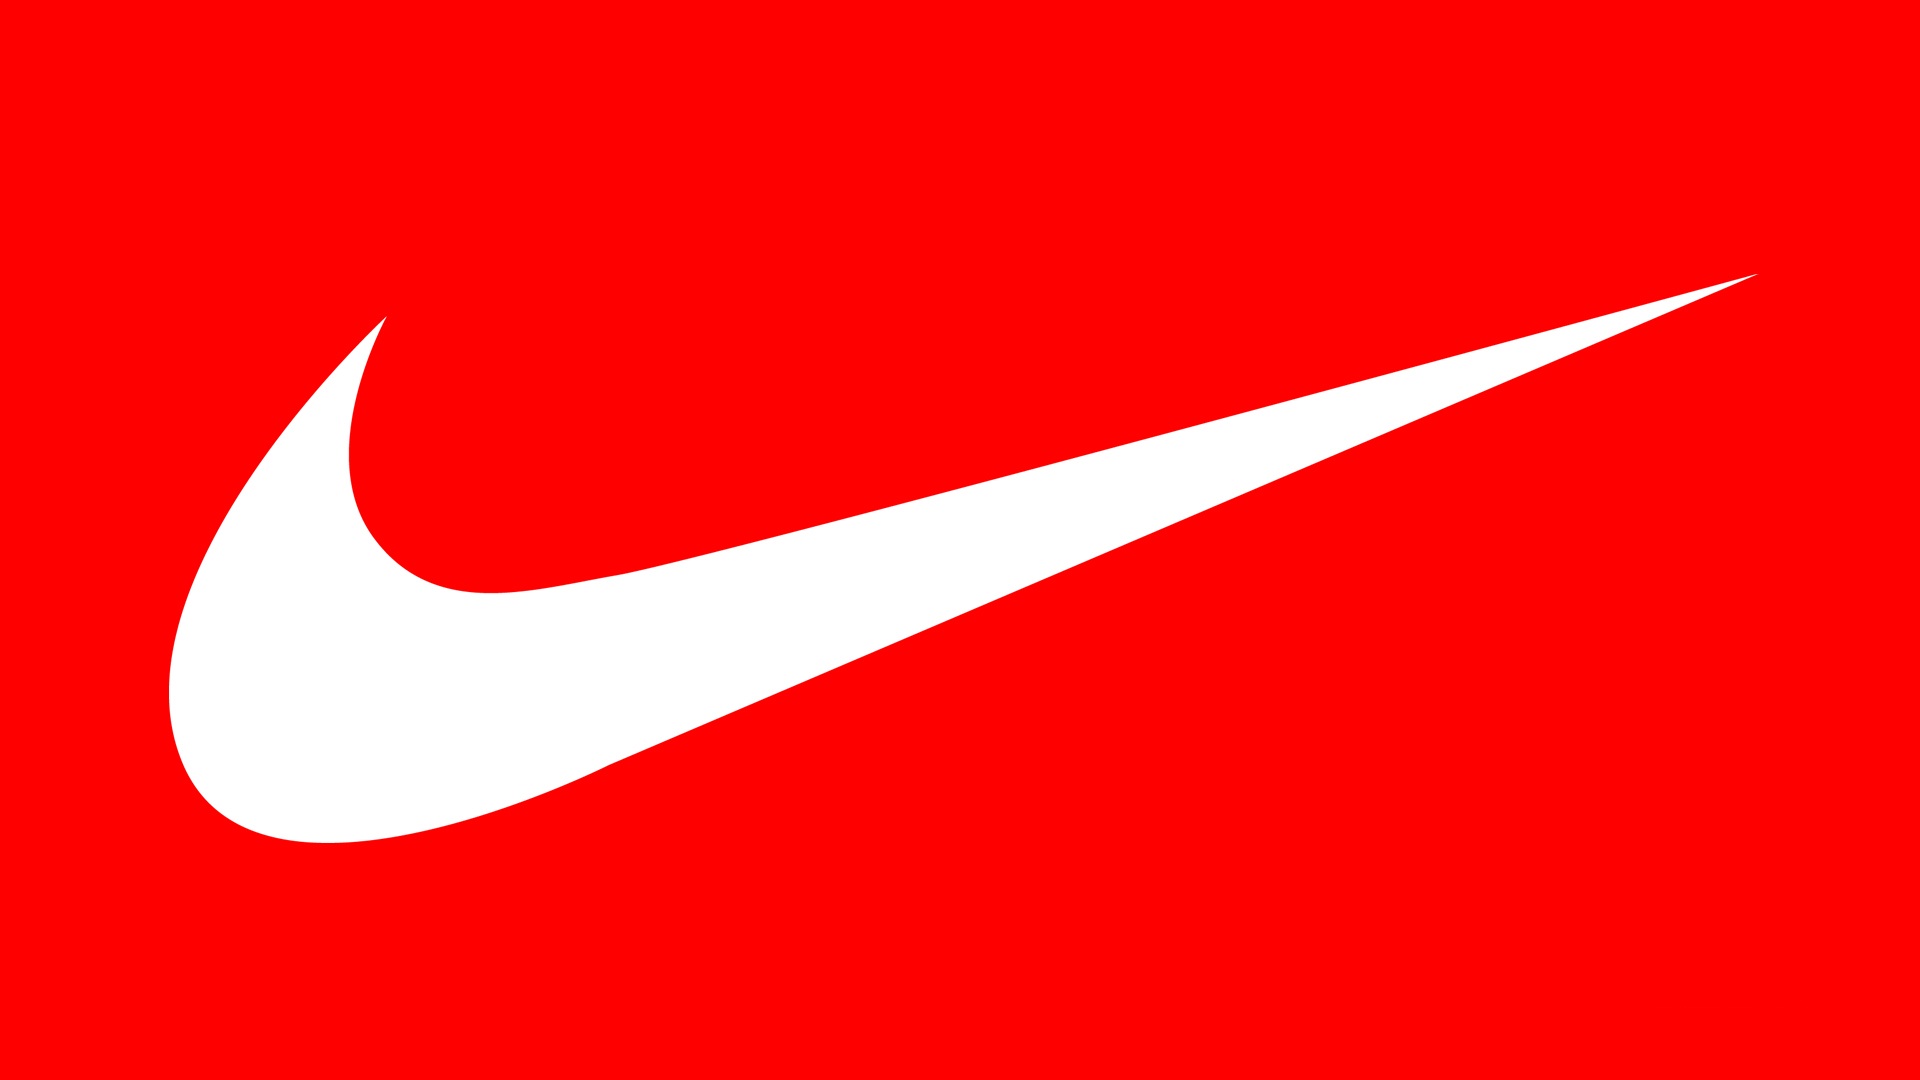 Nike Wallpaper